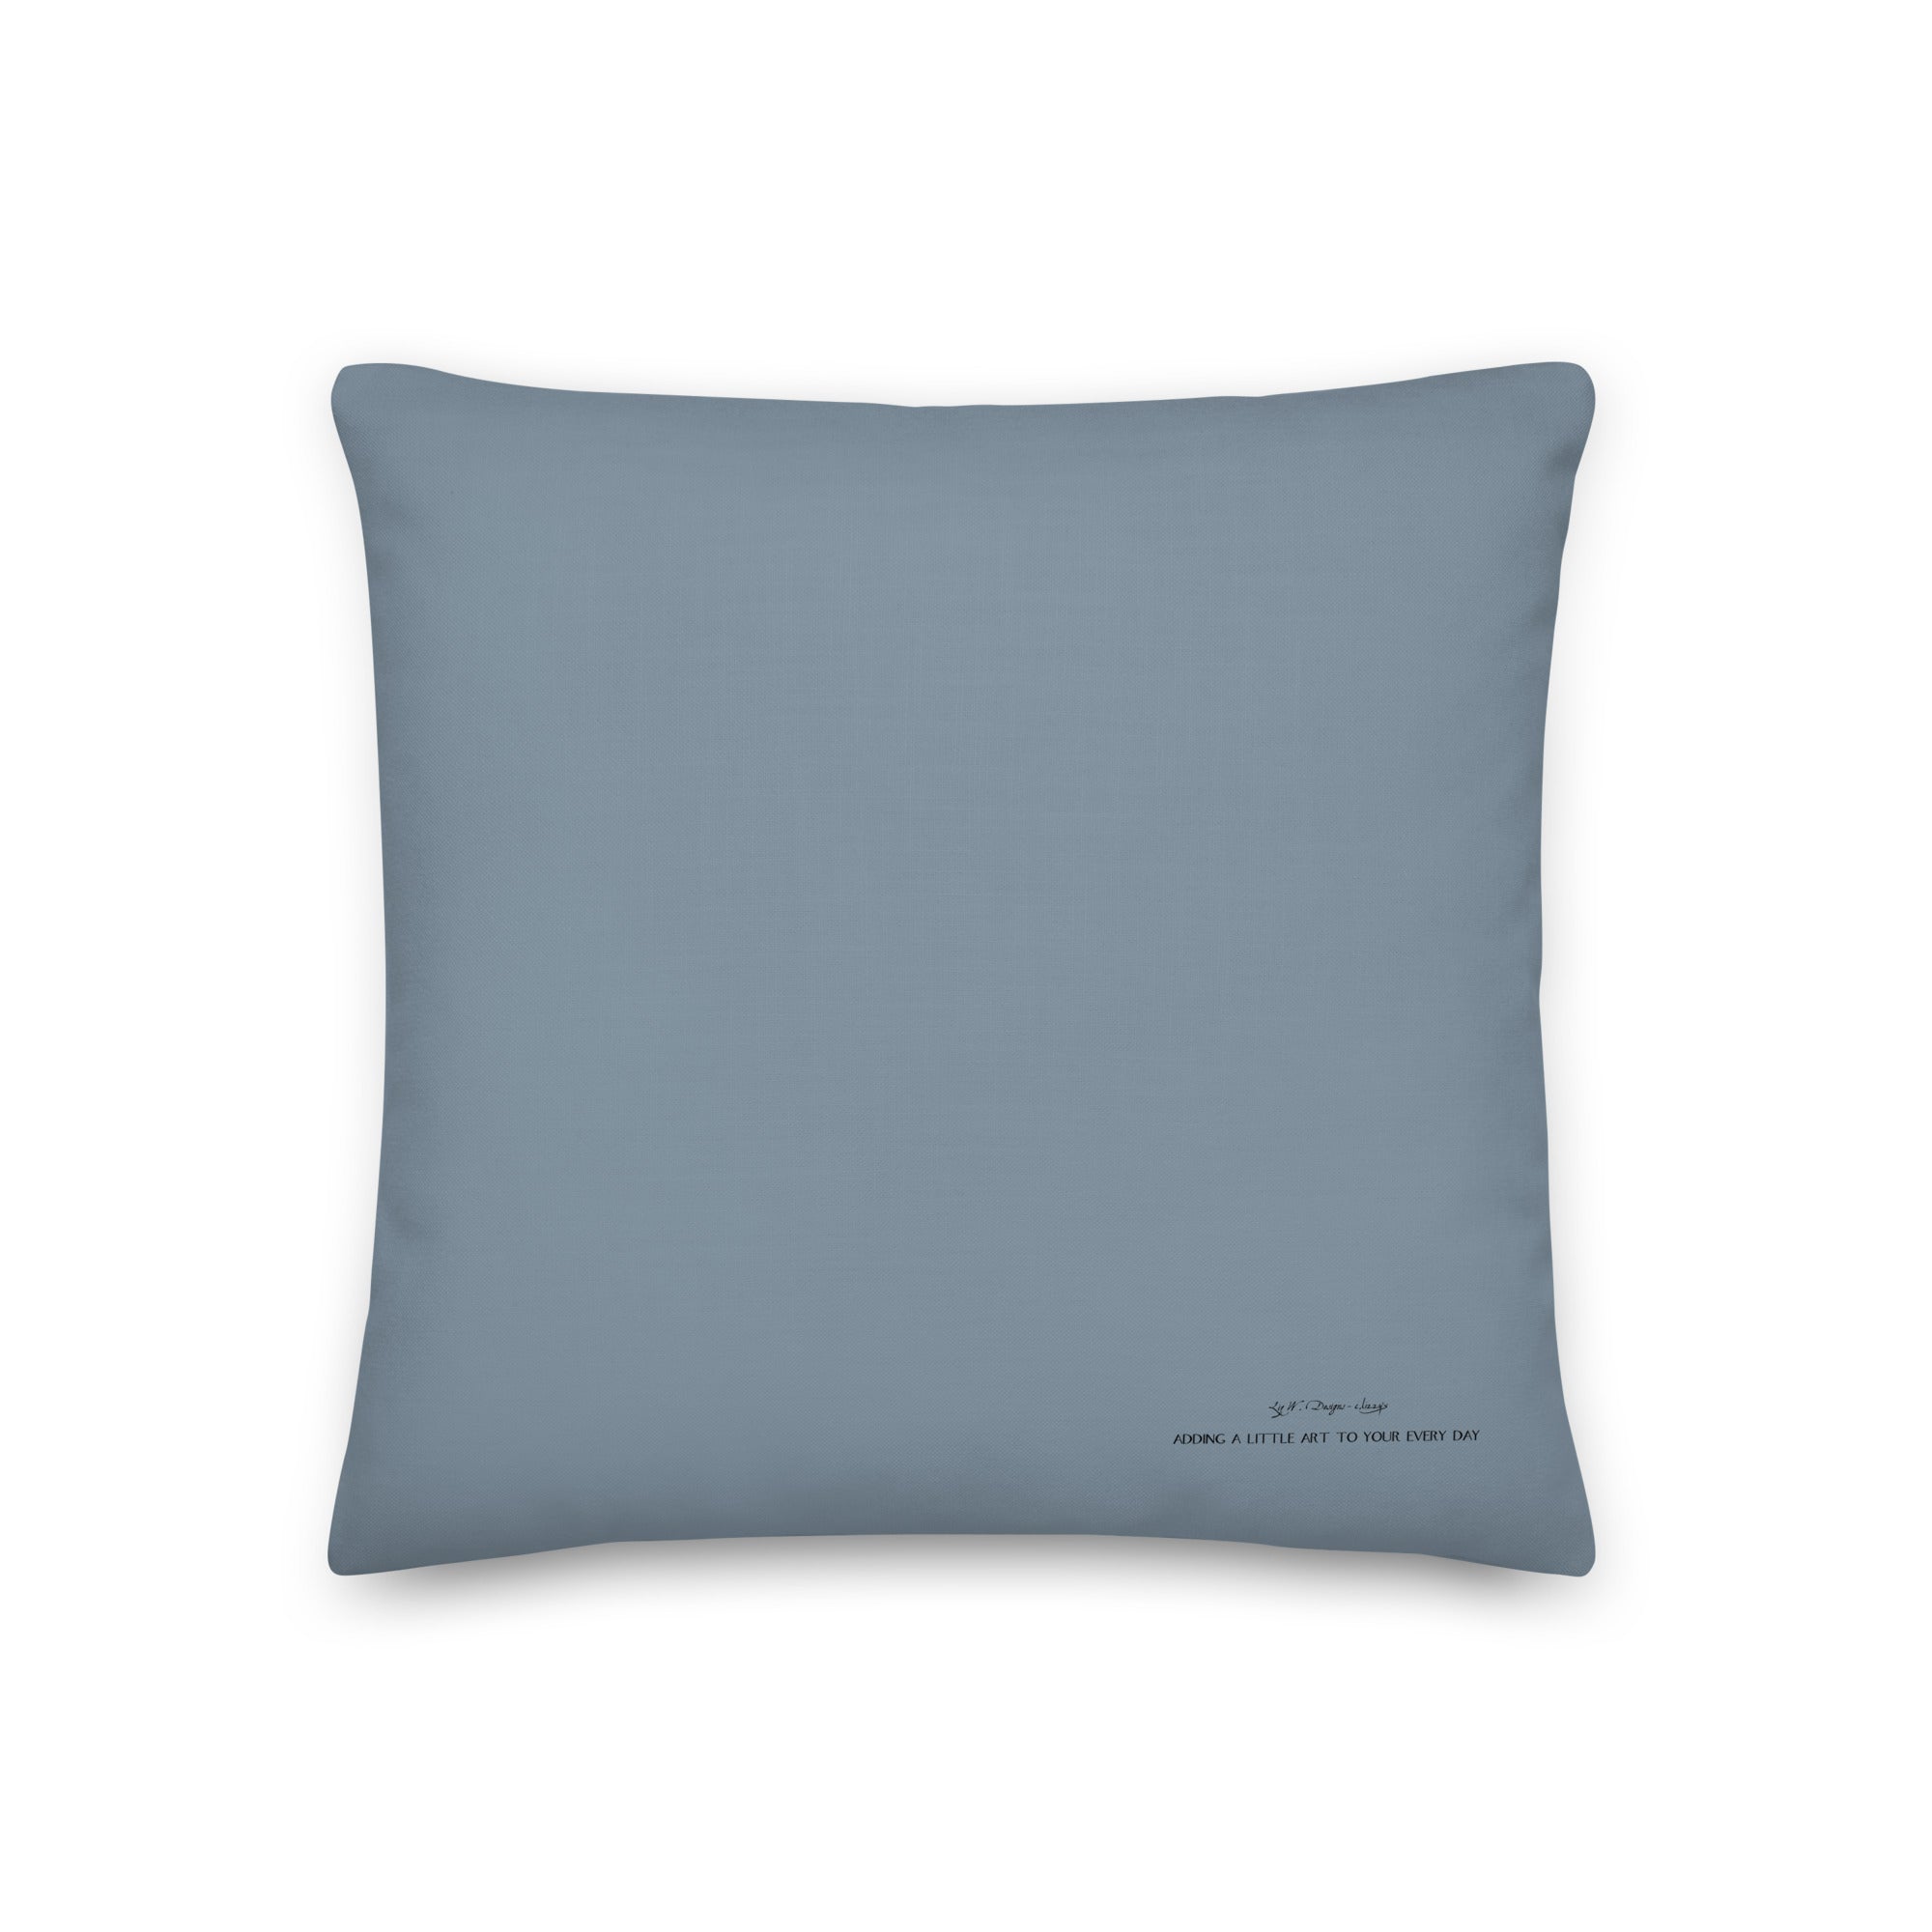 NEW! - Just Gnoming Along - Artful Pillow